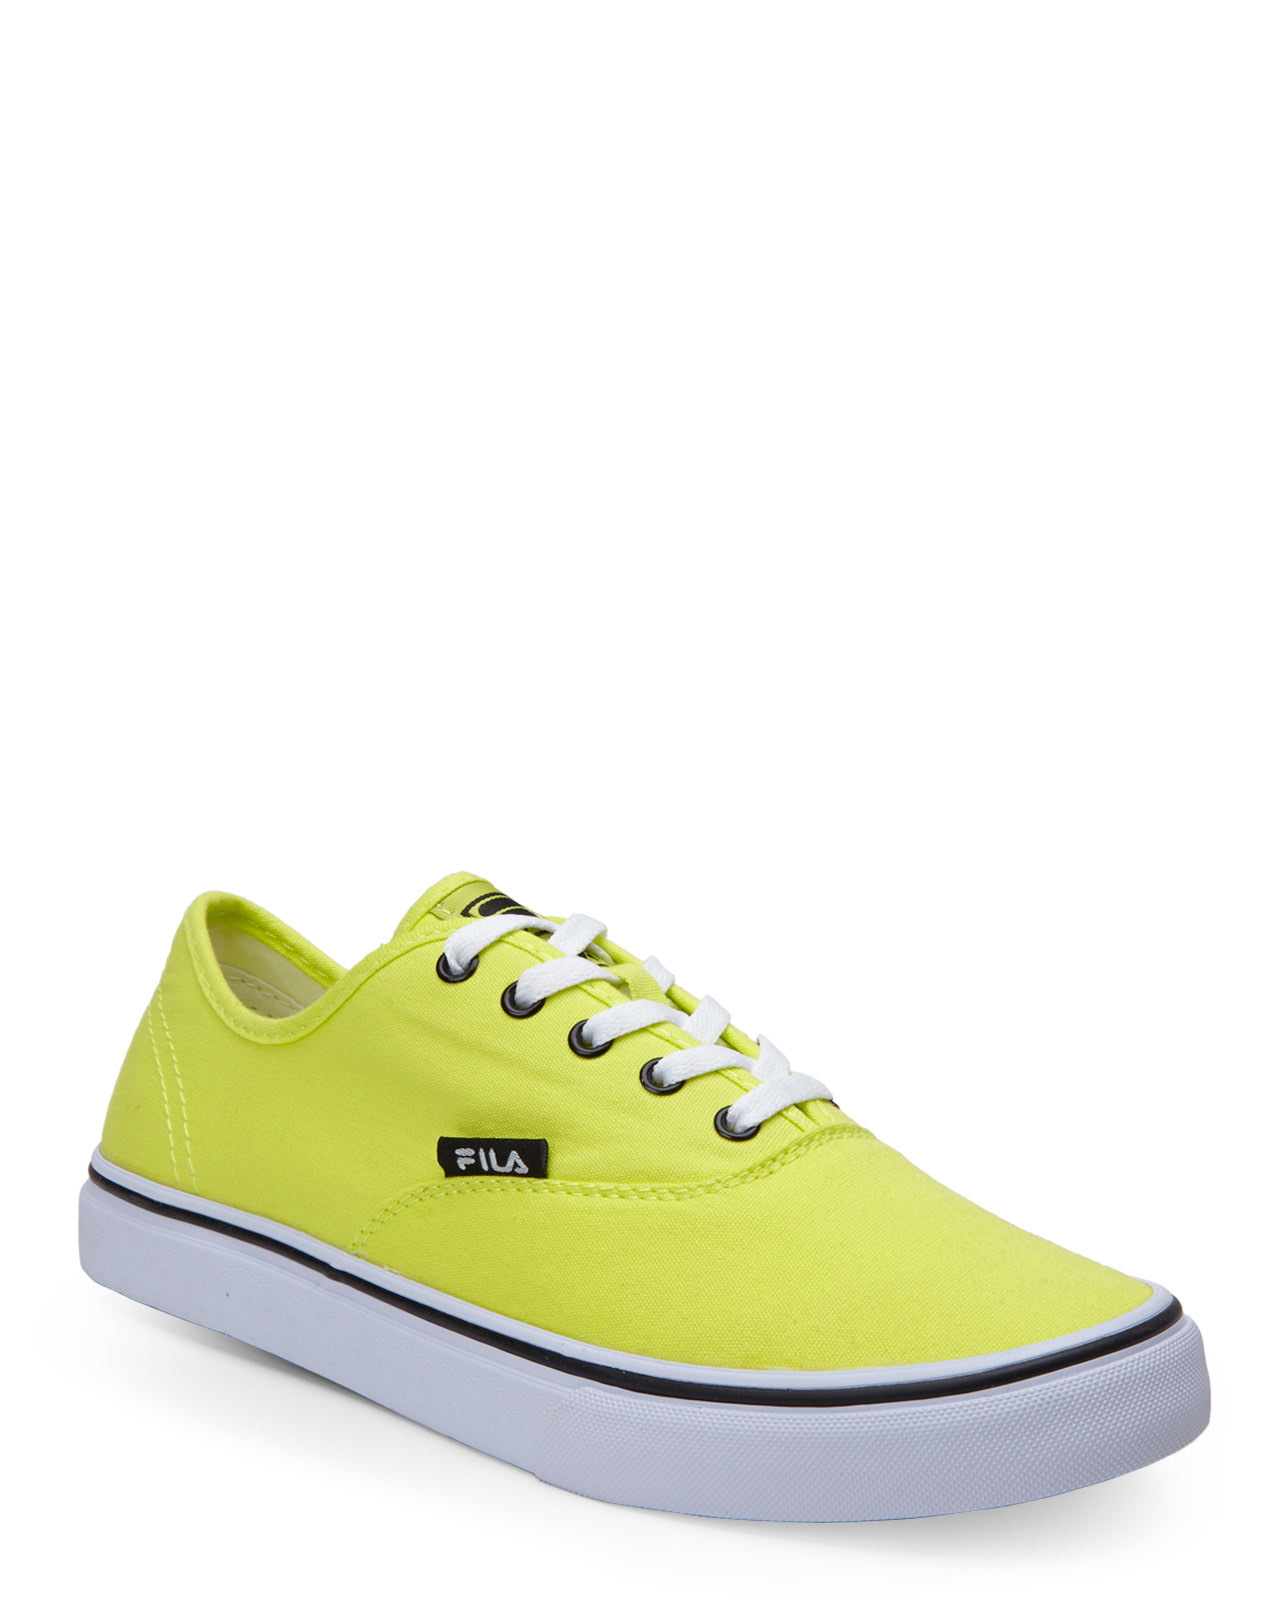 Fila Neon Green Classic Canvas Sneakers for Men - Lyst